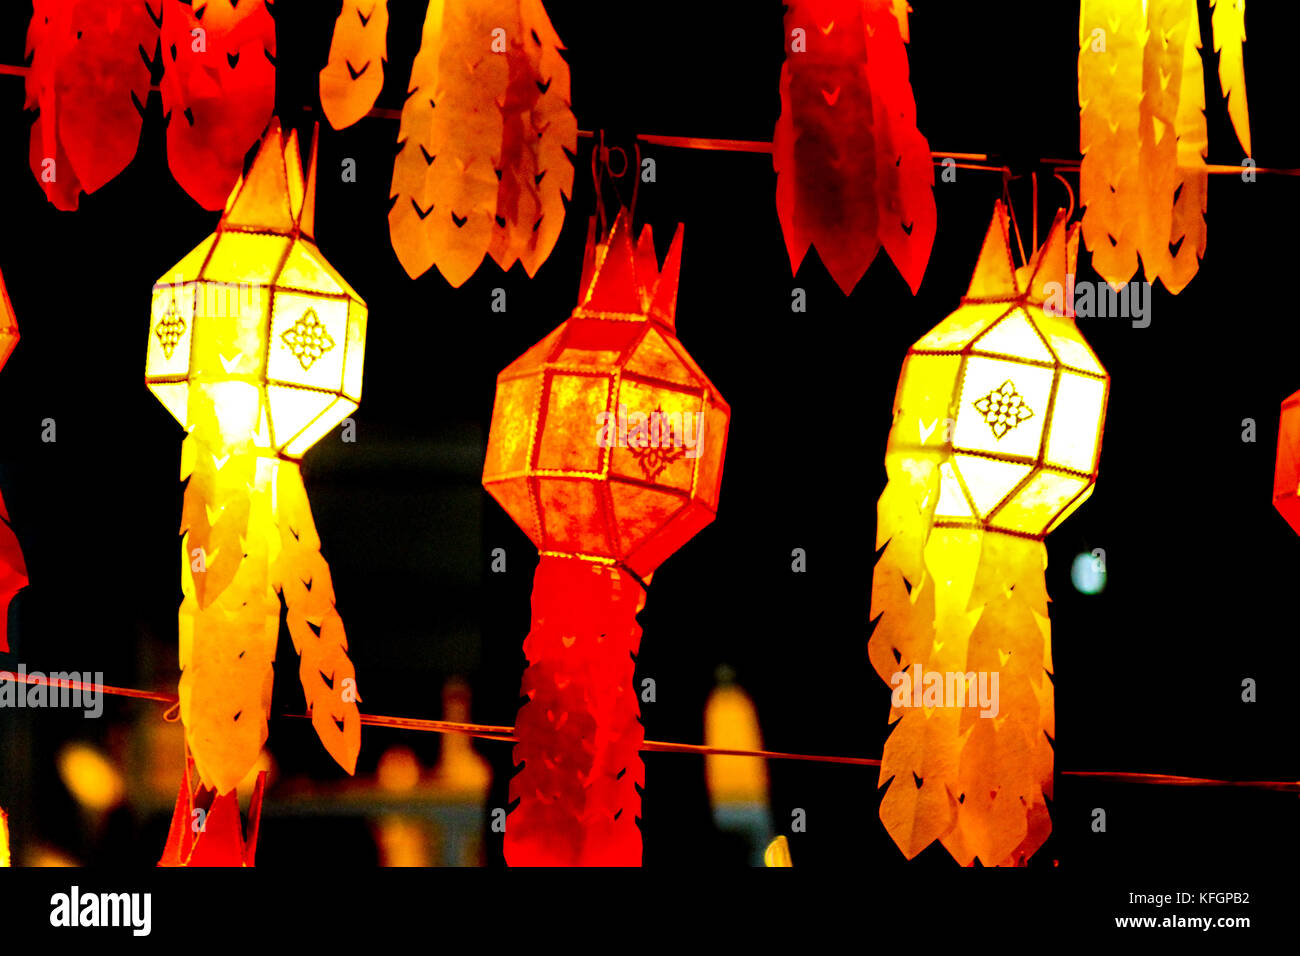 Traditional thai lantern called Lanna Lanterns displayed in the night market of Chiang mai, Thailand Stock Photo